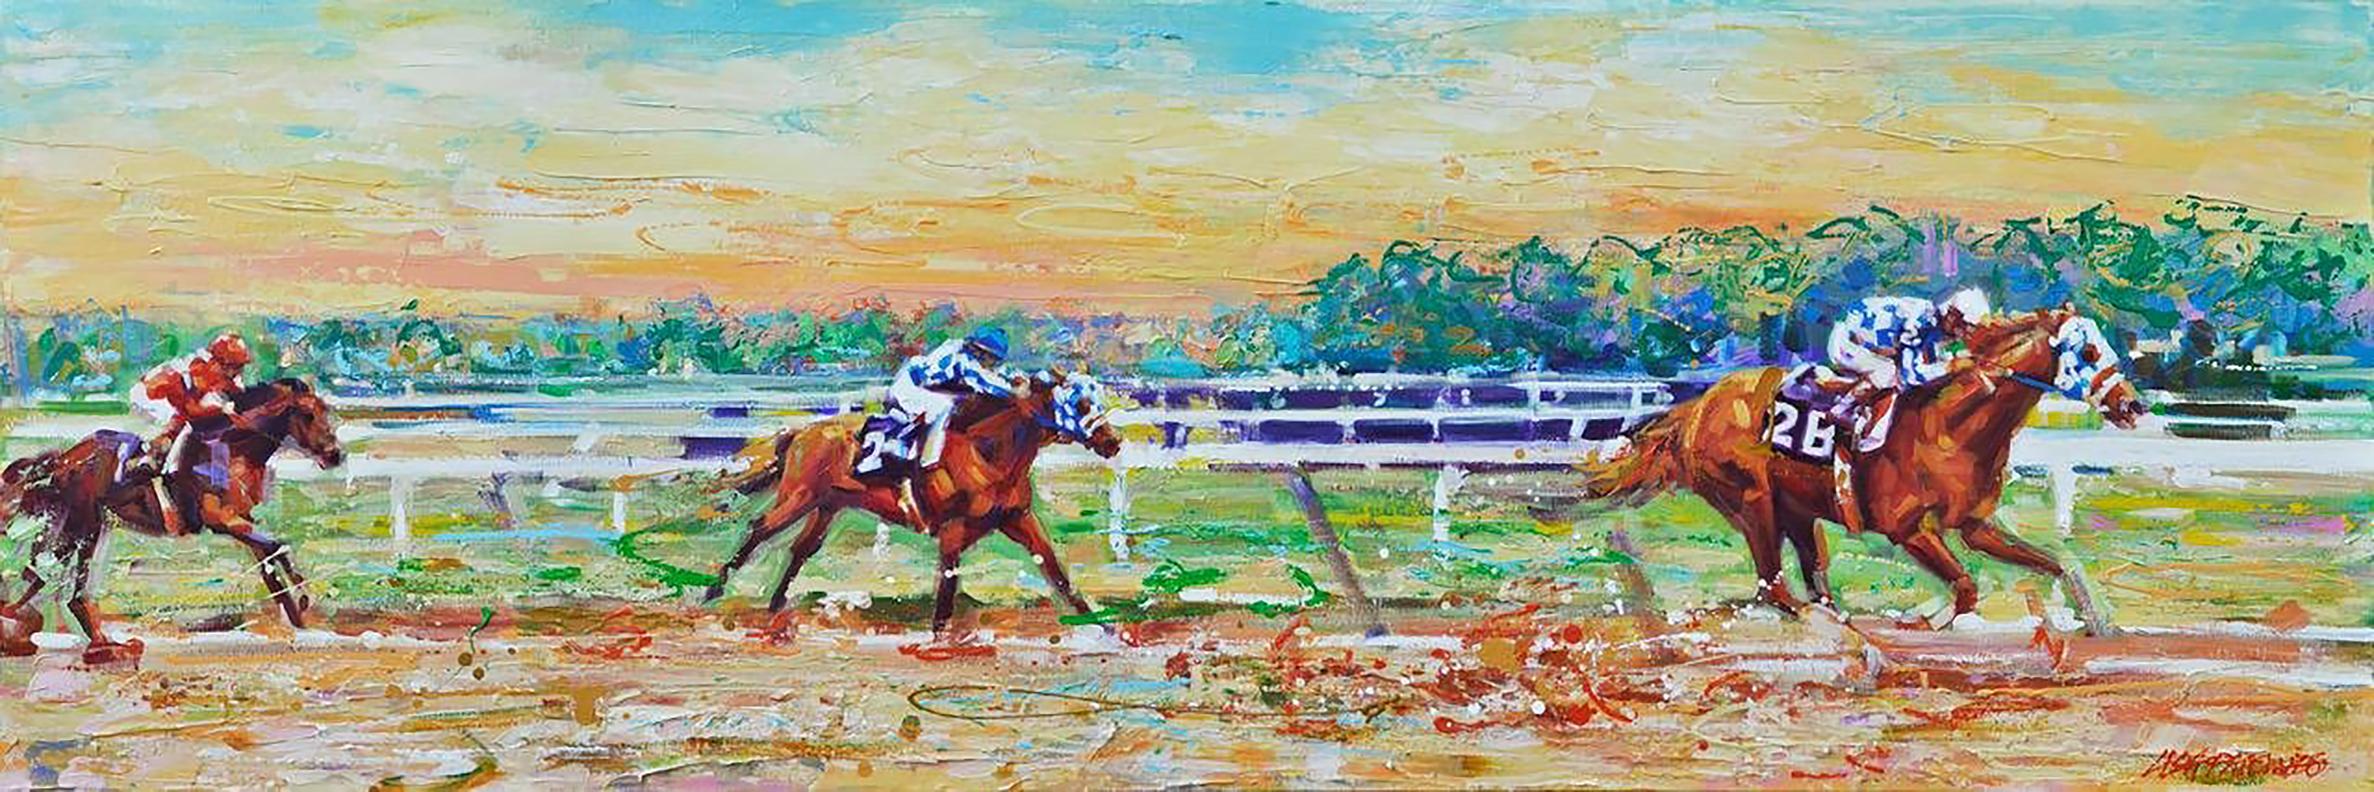 Lisa Palombo, "Meadow Stable Mates" Secretariat Horse Race Marlboro Cup Painting